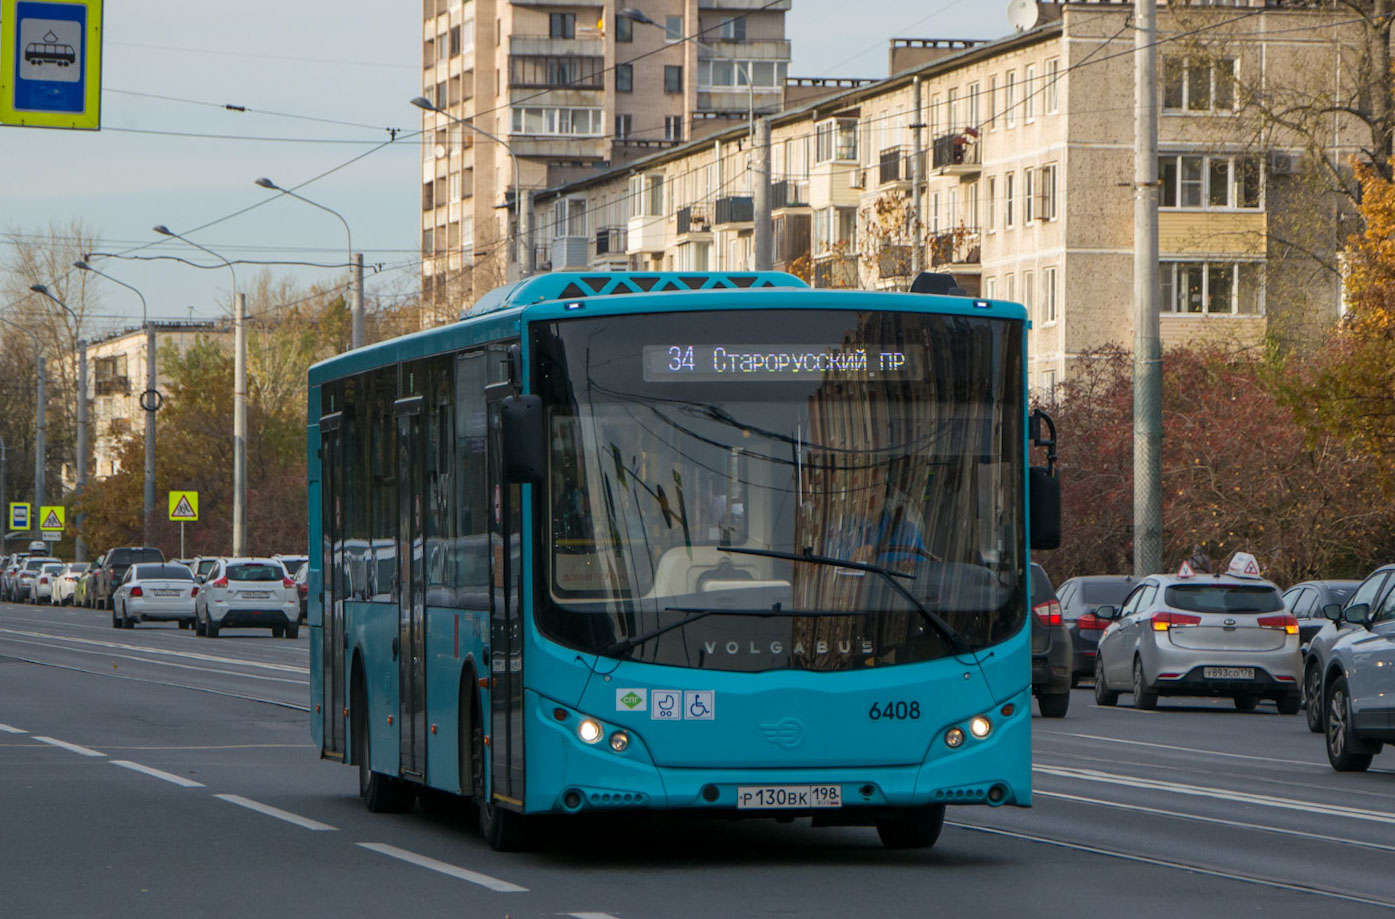 Saint Petersburg, Volgabus-5270.G2 (LNG) # 6408